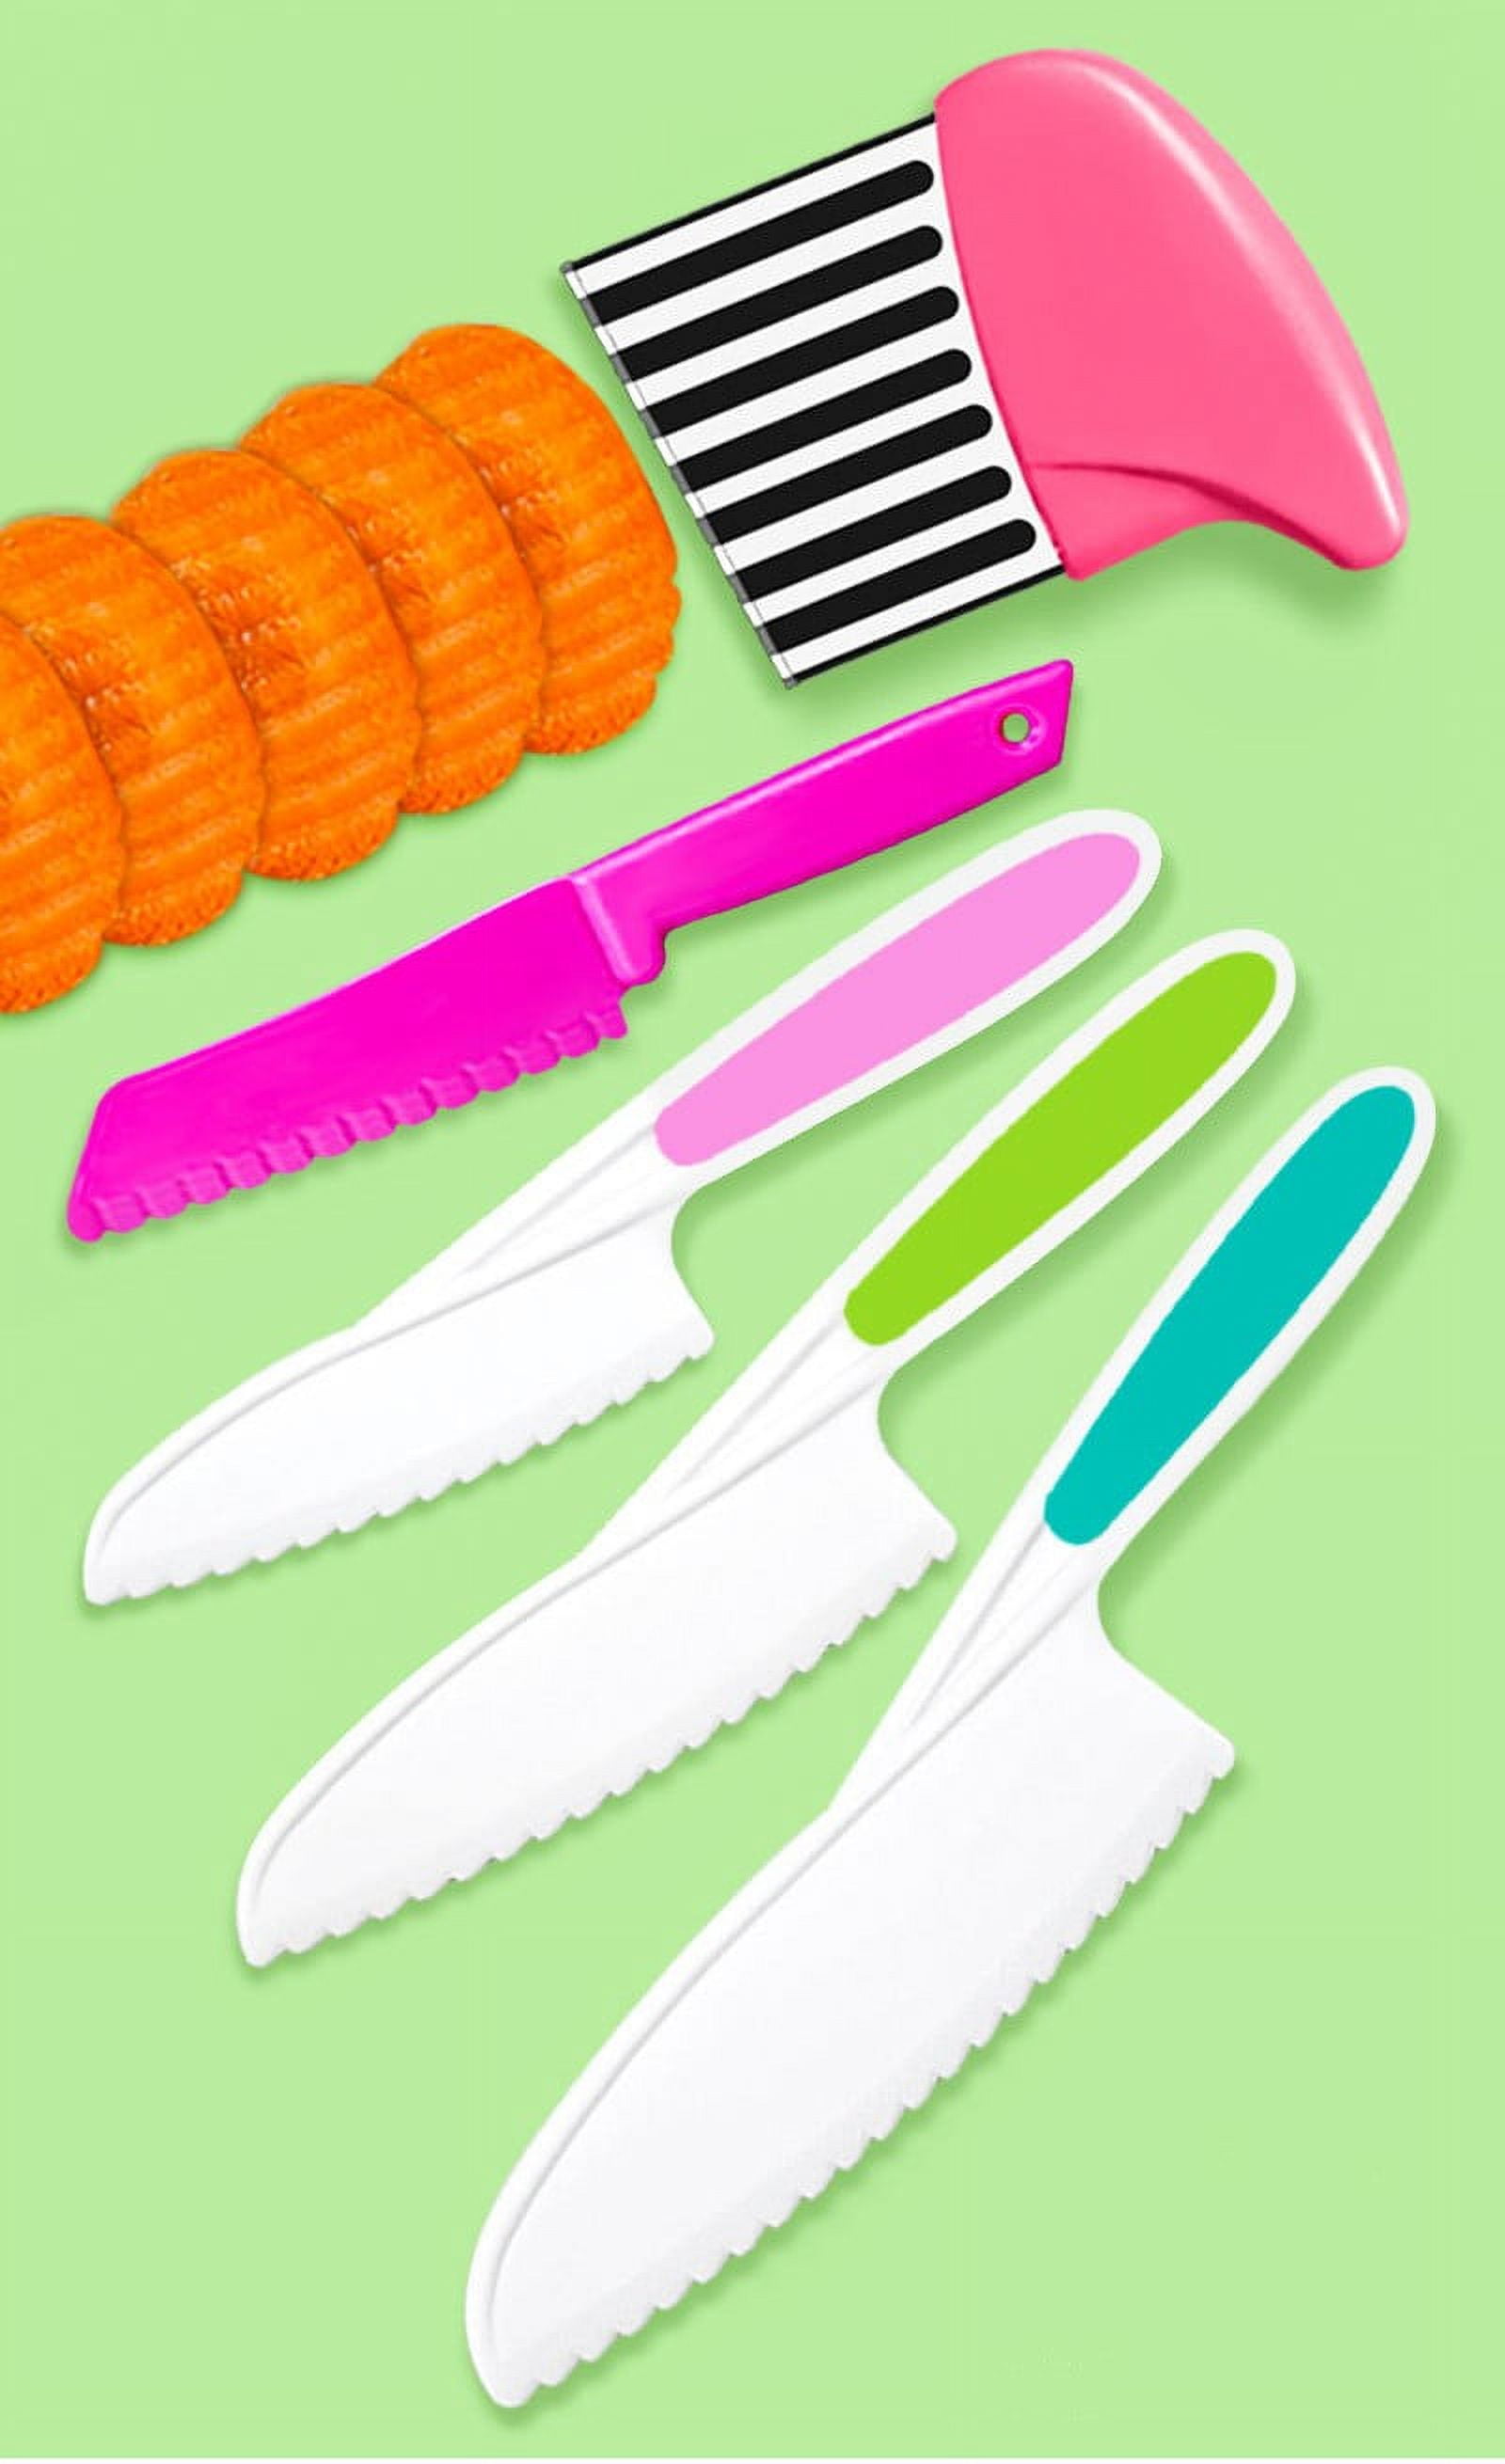 KYAIGUO 5 PCS Kids Knife Set for Real Cookin Cute Cartoon Man